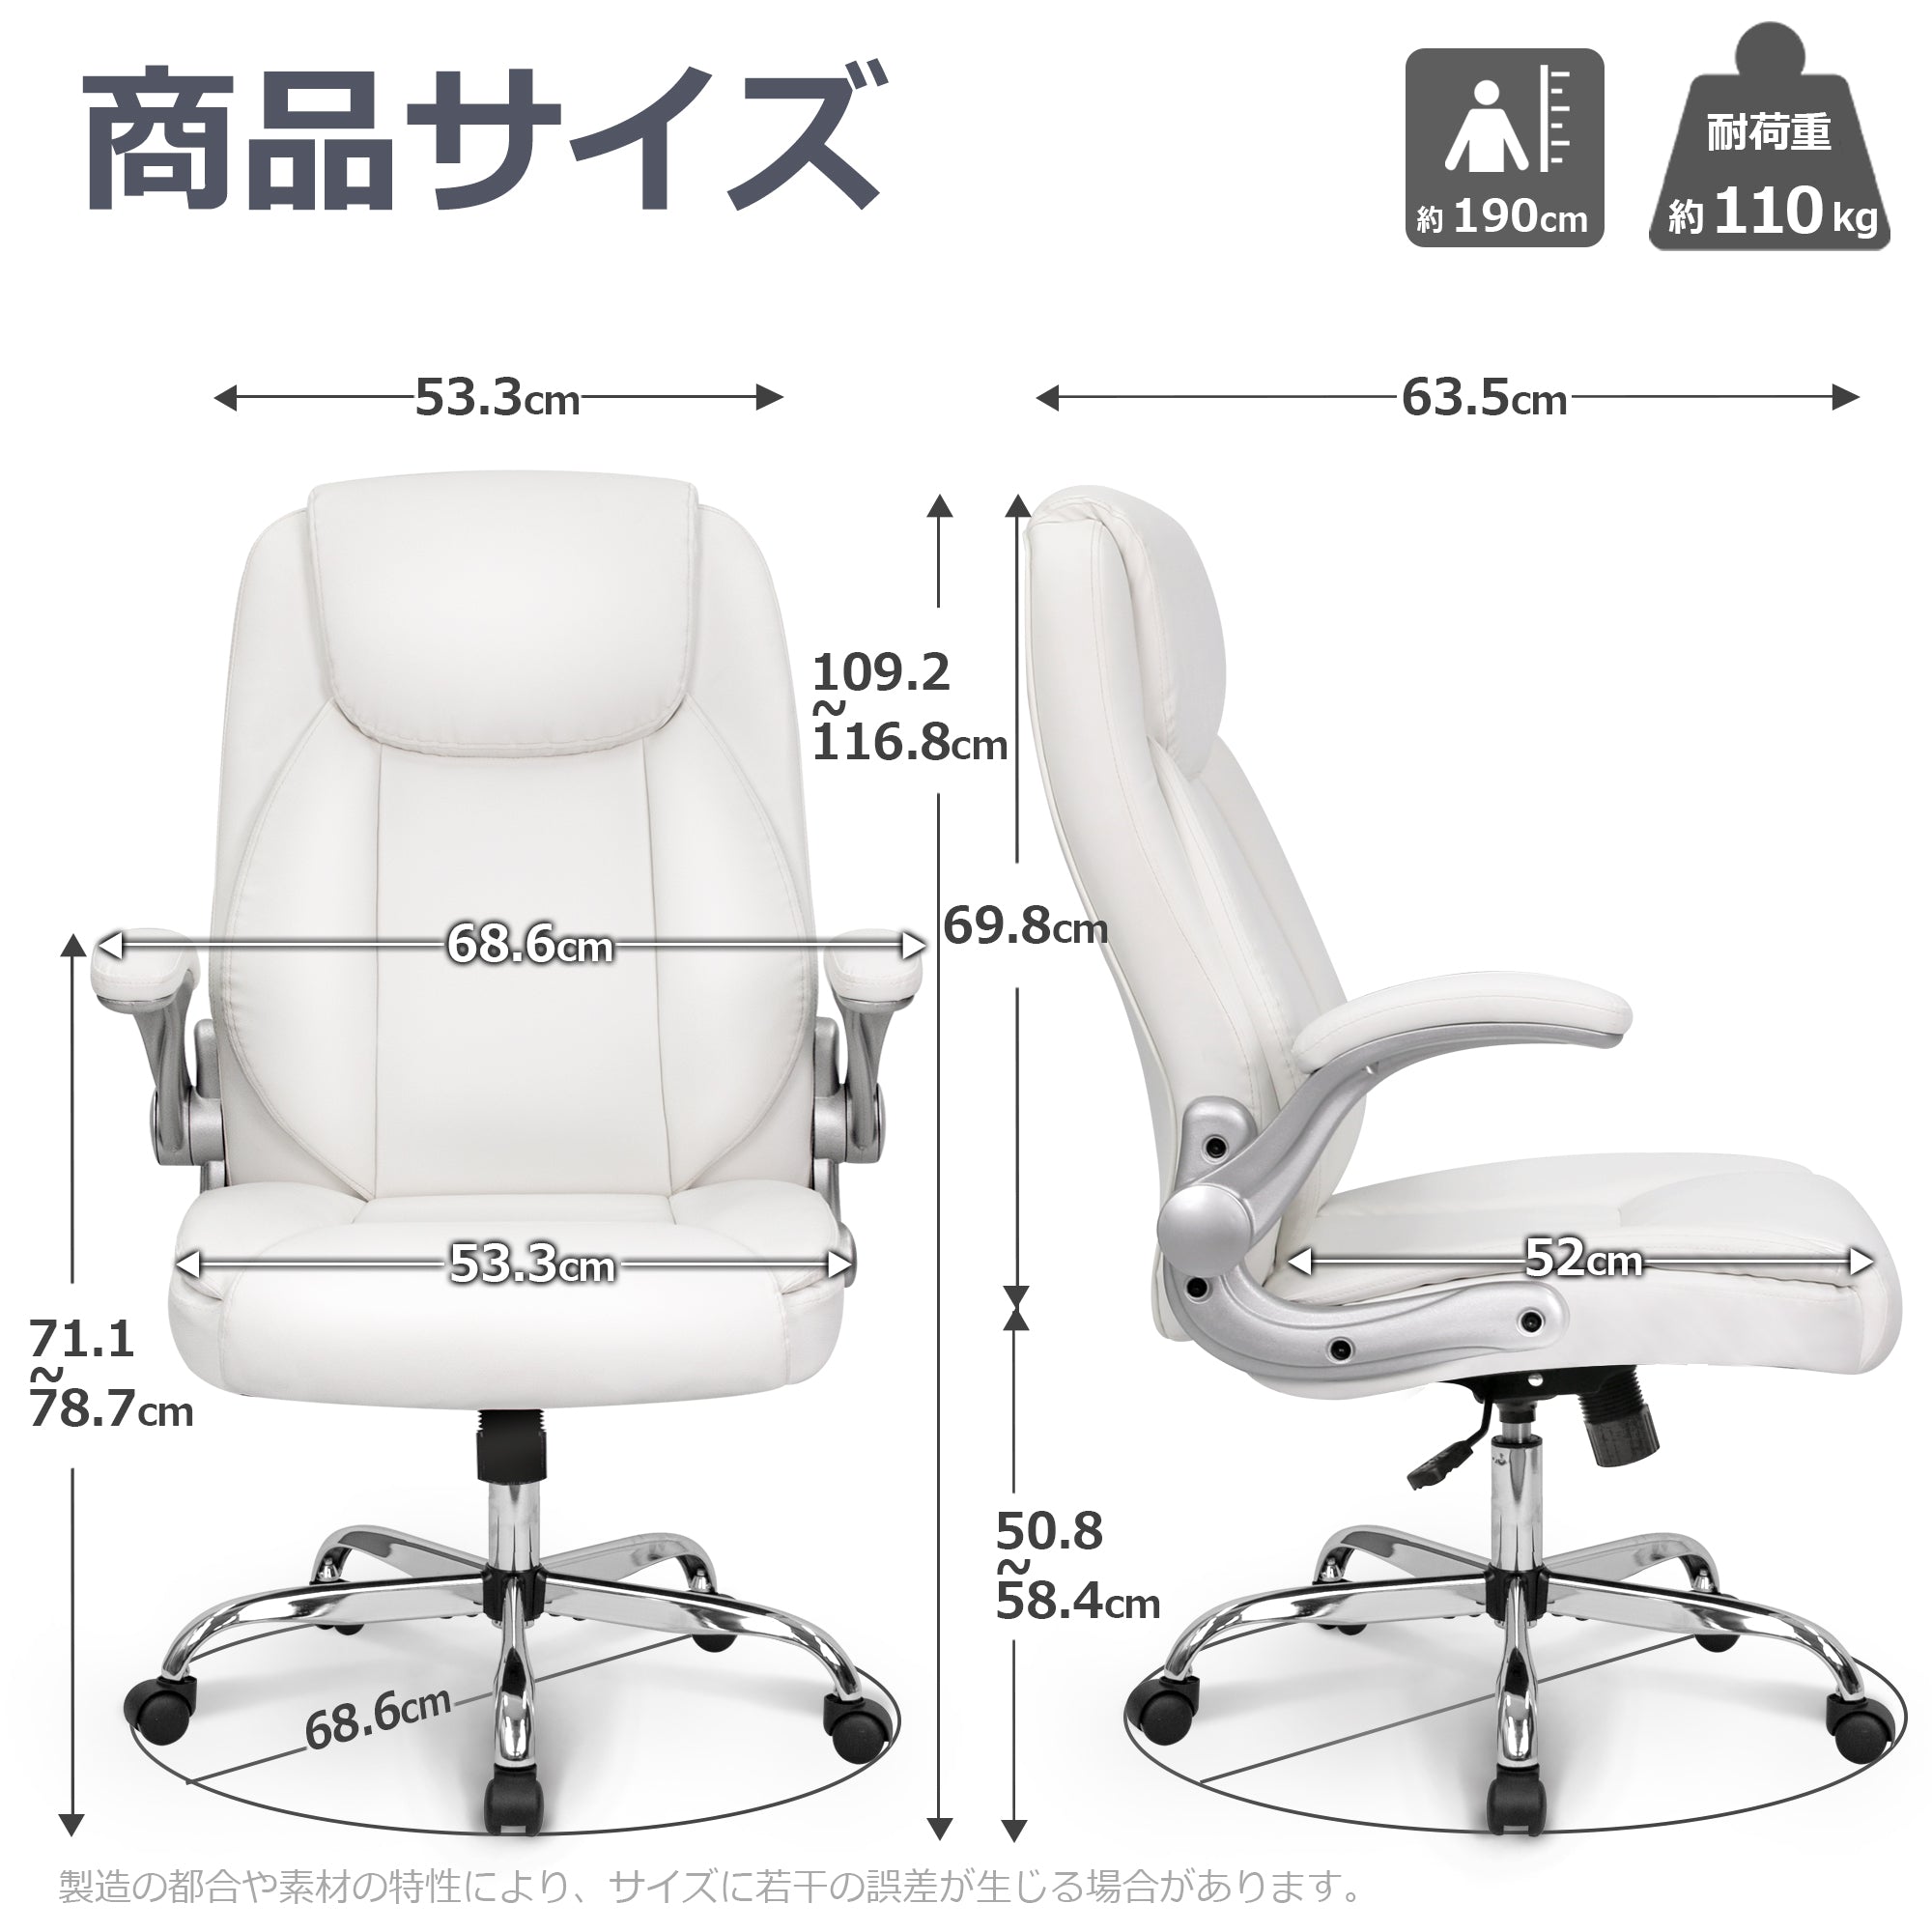 H-PAC 社長椅子 高級 オフィスチェア ワークチェア 事務椅子 ゲーミング 人間工学 PCチェア ハイバック 高さ調整 ホワイト